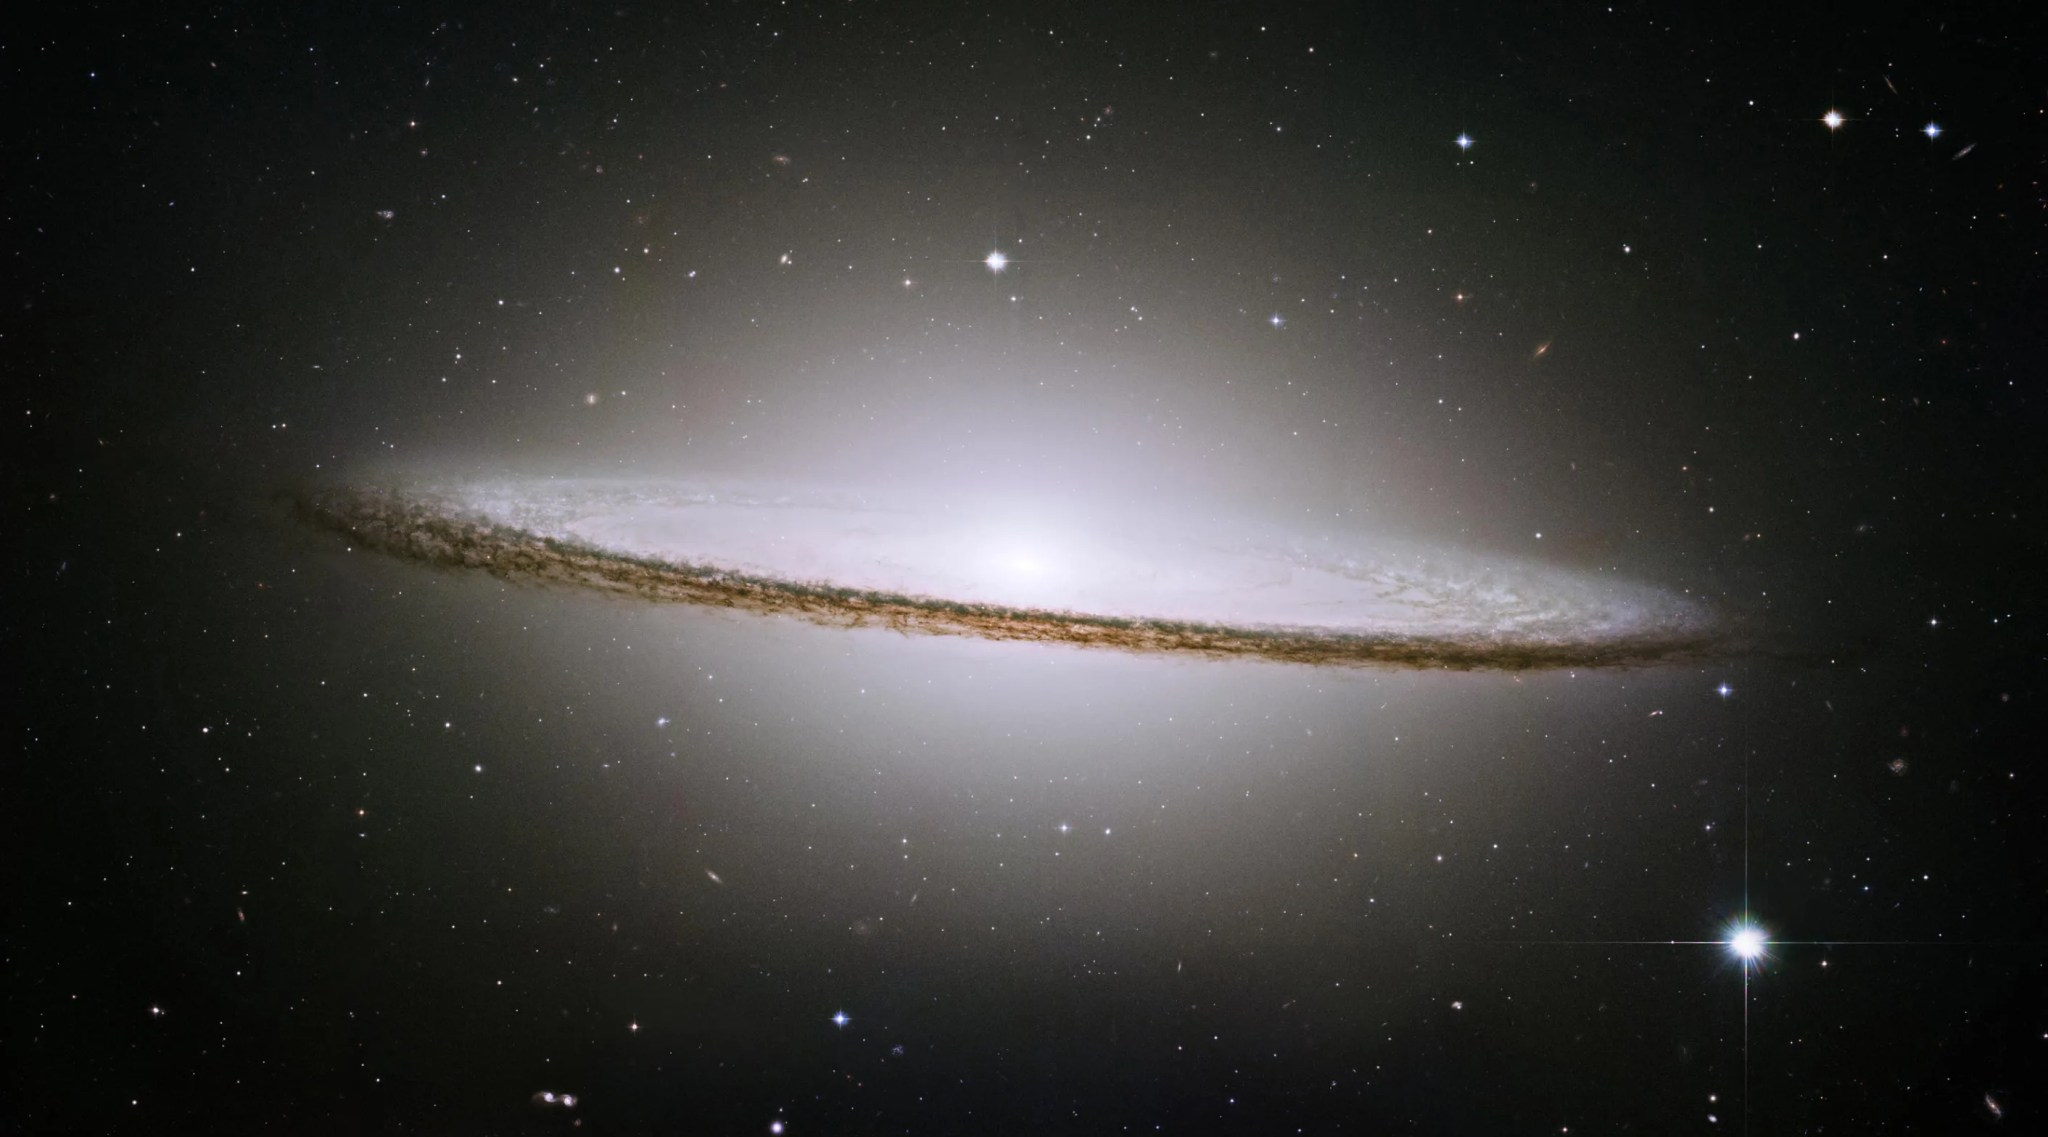 Hubble image of M104